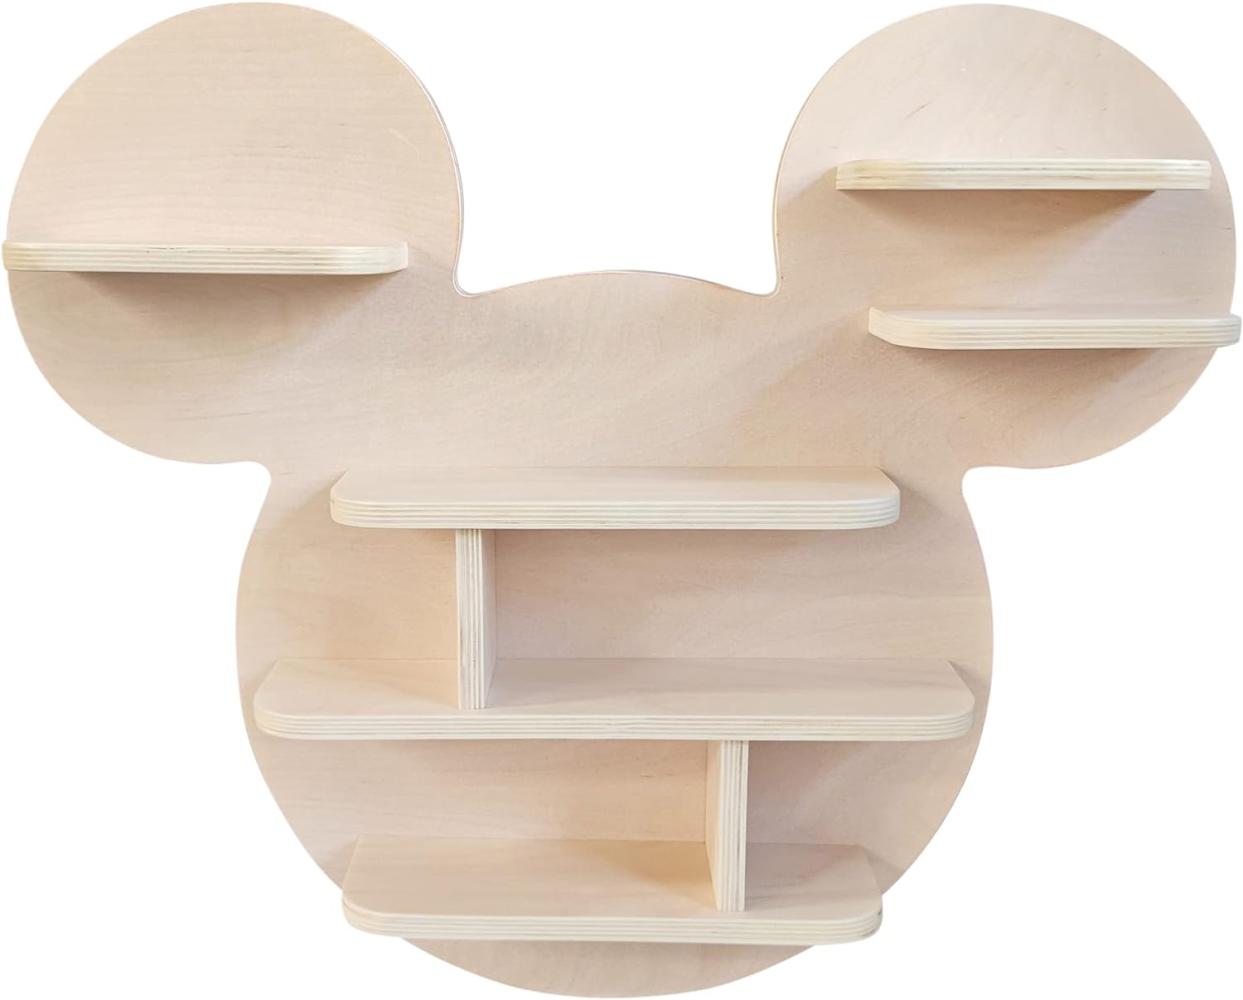 Disney Wandregal in Micky-Maus-Form, 8 Regale, natürliches Finish, 72 cm B x 12 cm T x 62 cm H Bild 1